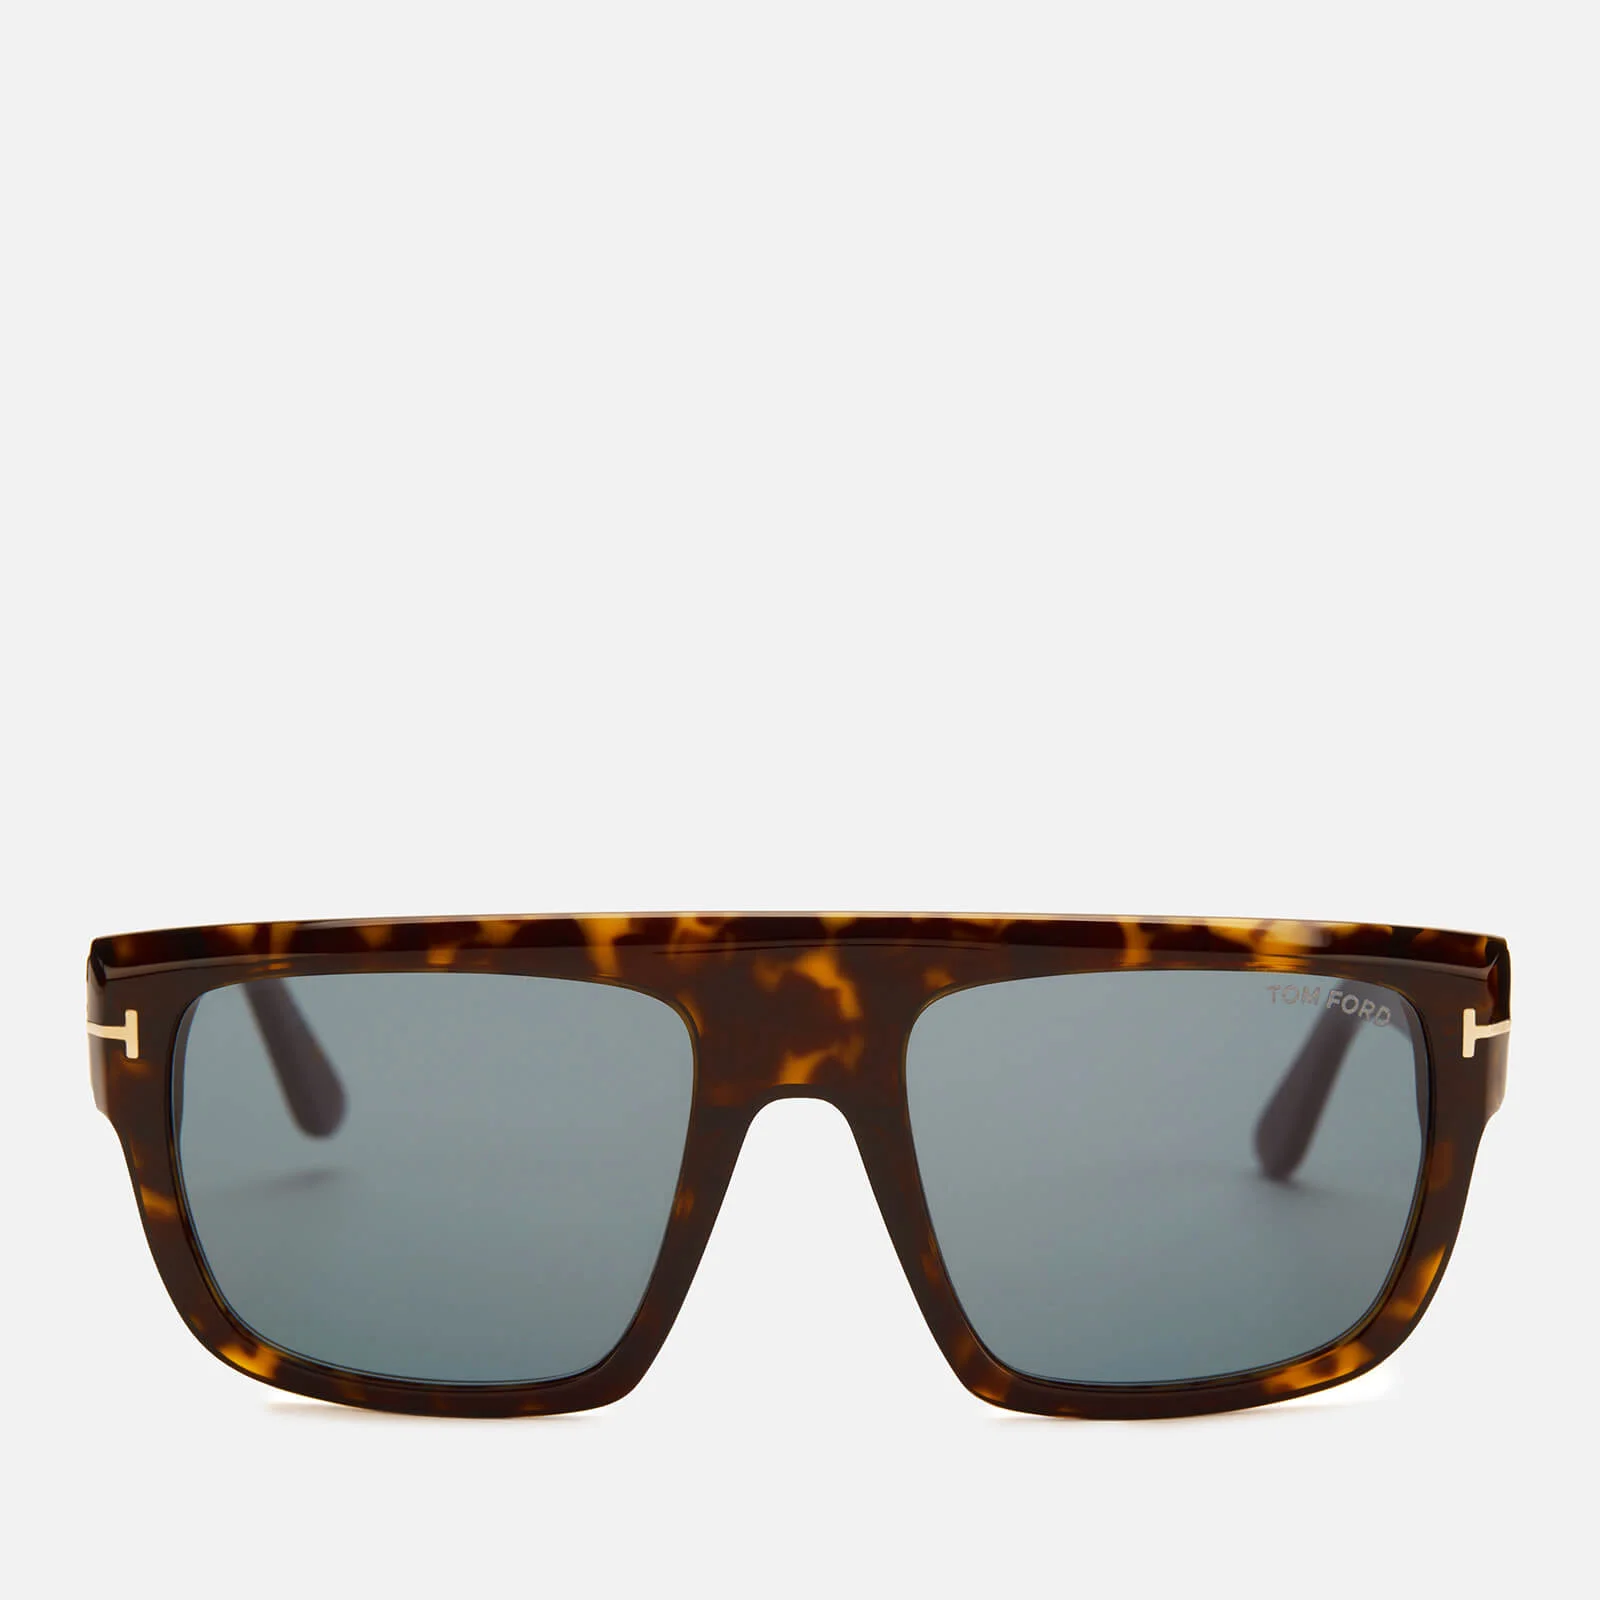 Tom Ford Men's Alessio Sunglasses - Dark Havana/Blue Image 1